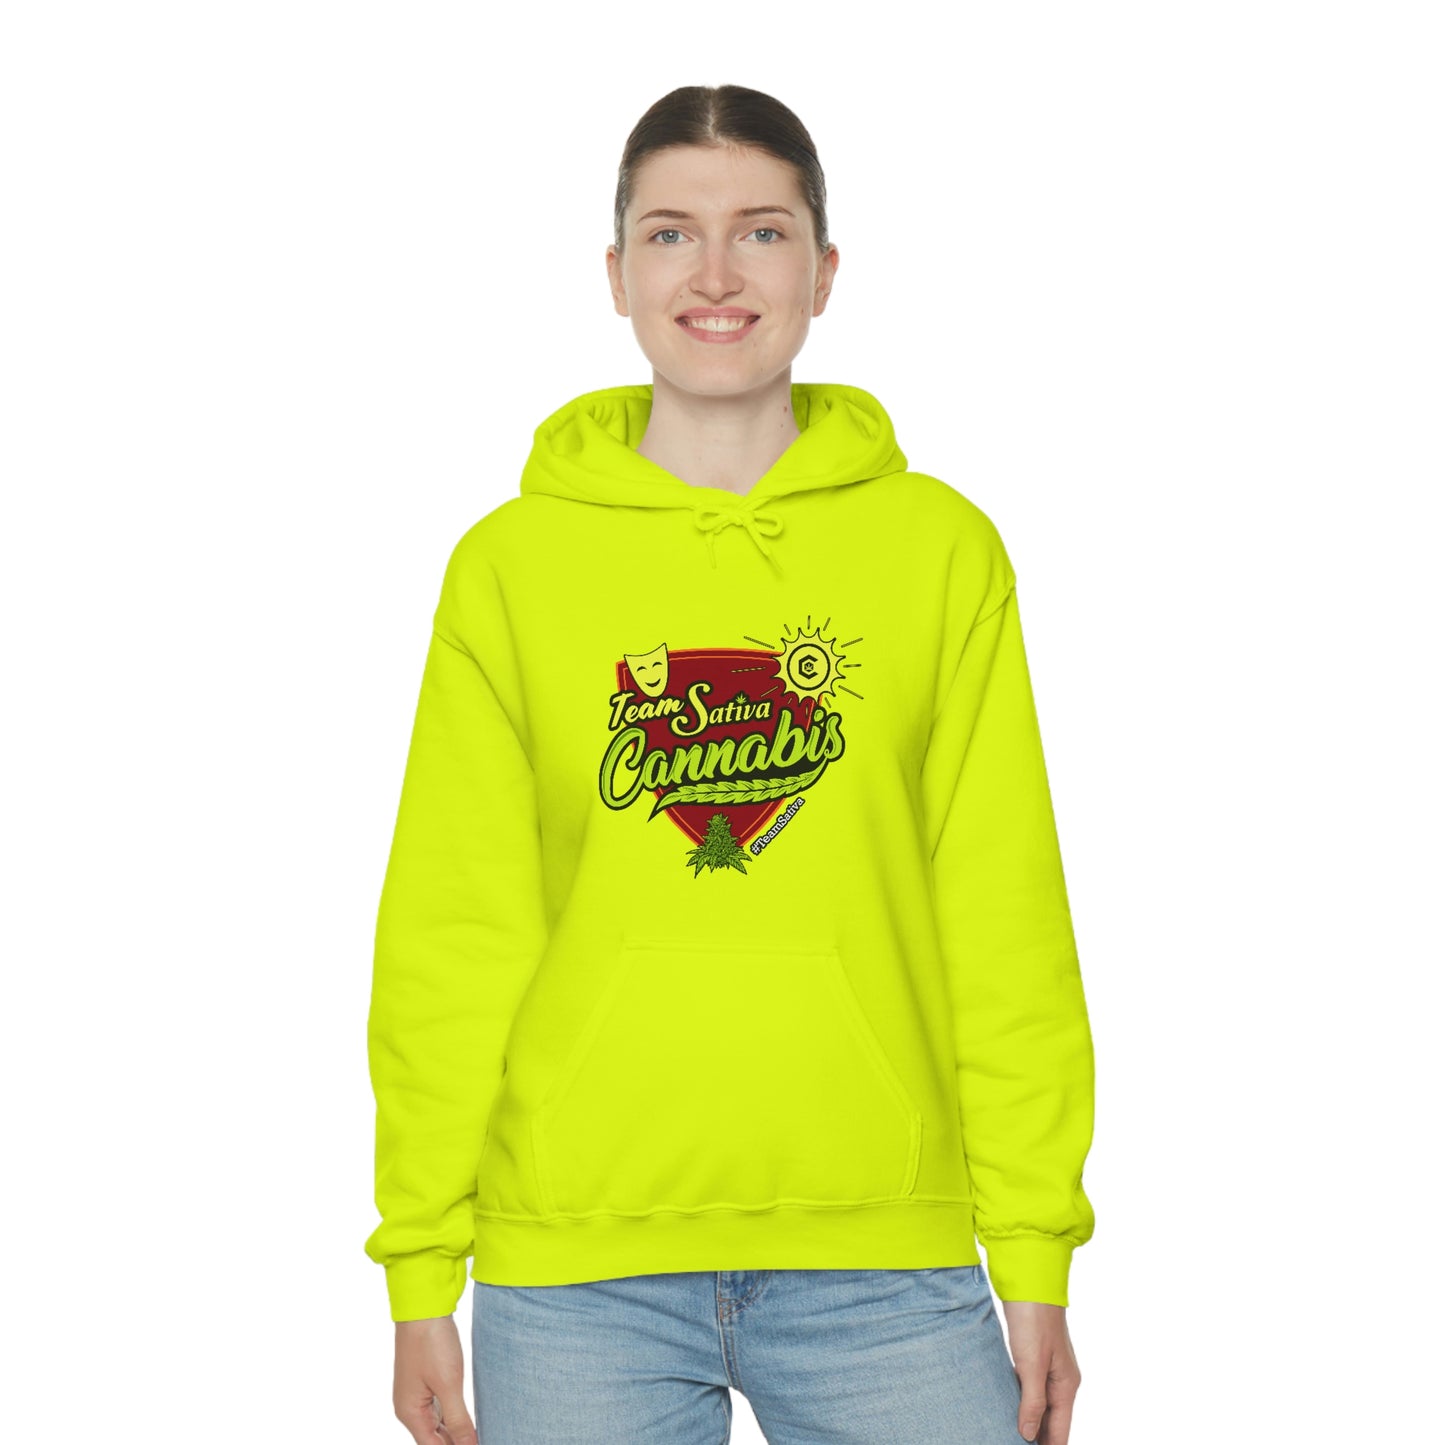 a woman wearing a neon yellow Team Sativa Stoner Sweatshirt with the word grandma on it.